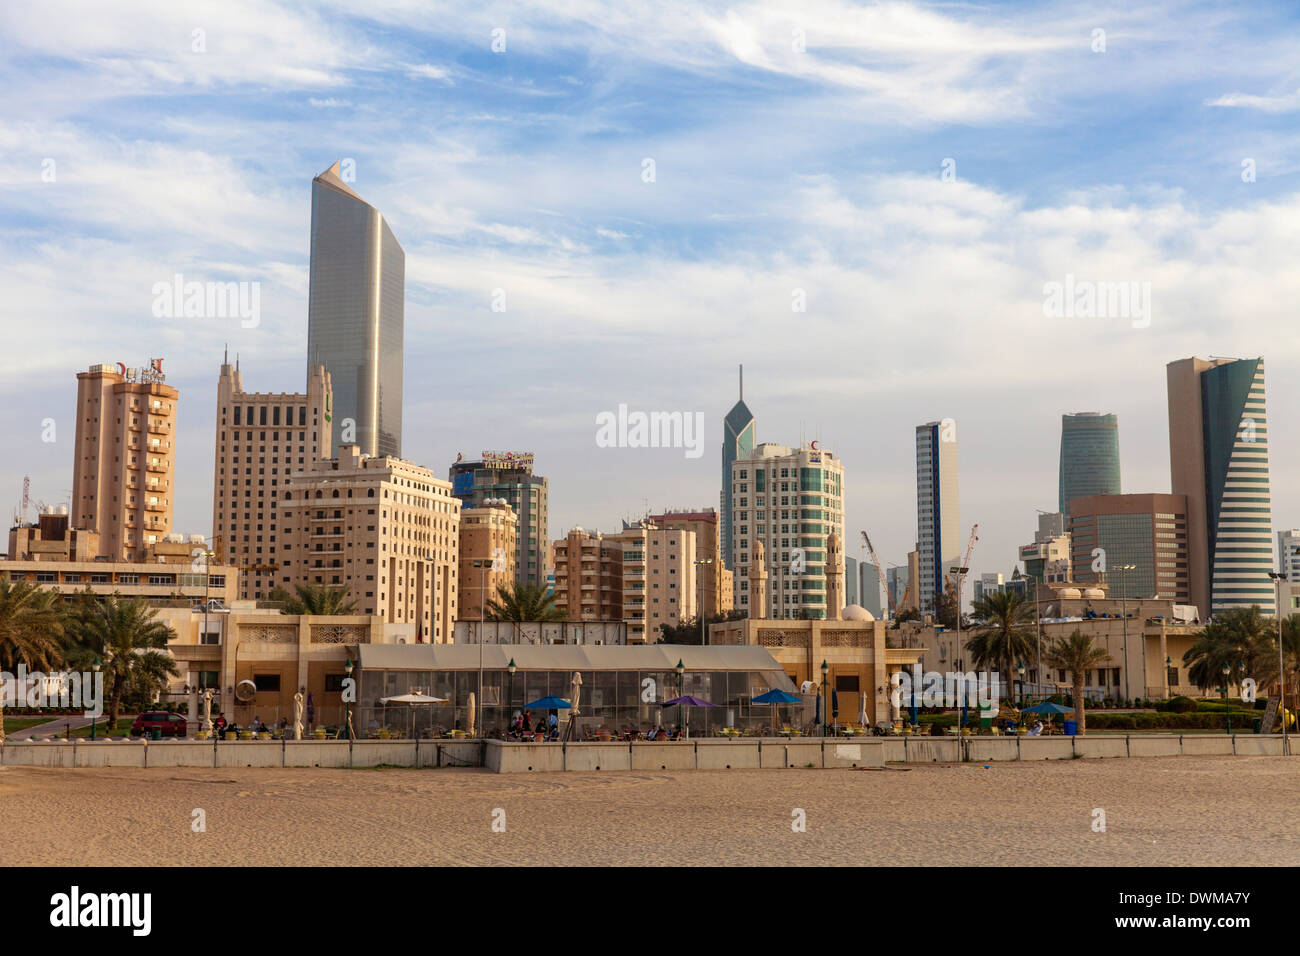 Looking towards city center buildings from a beach on Arabian Gulf Street, Sharq, Kuwait City, Kuwait, Middle East Stock Photo